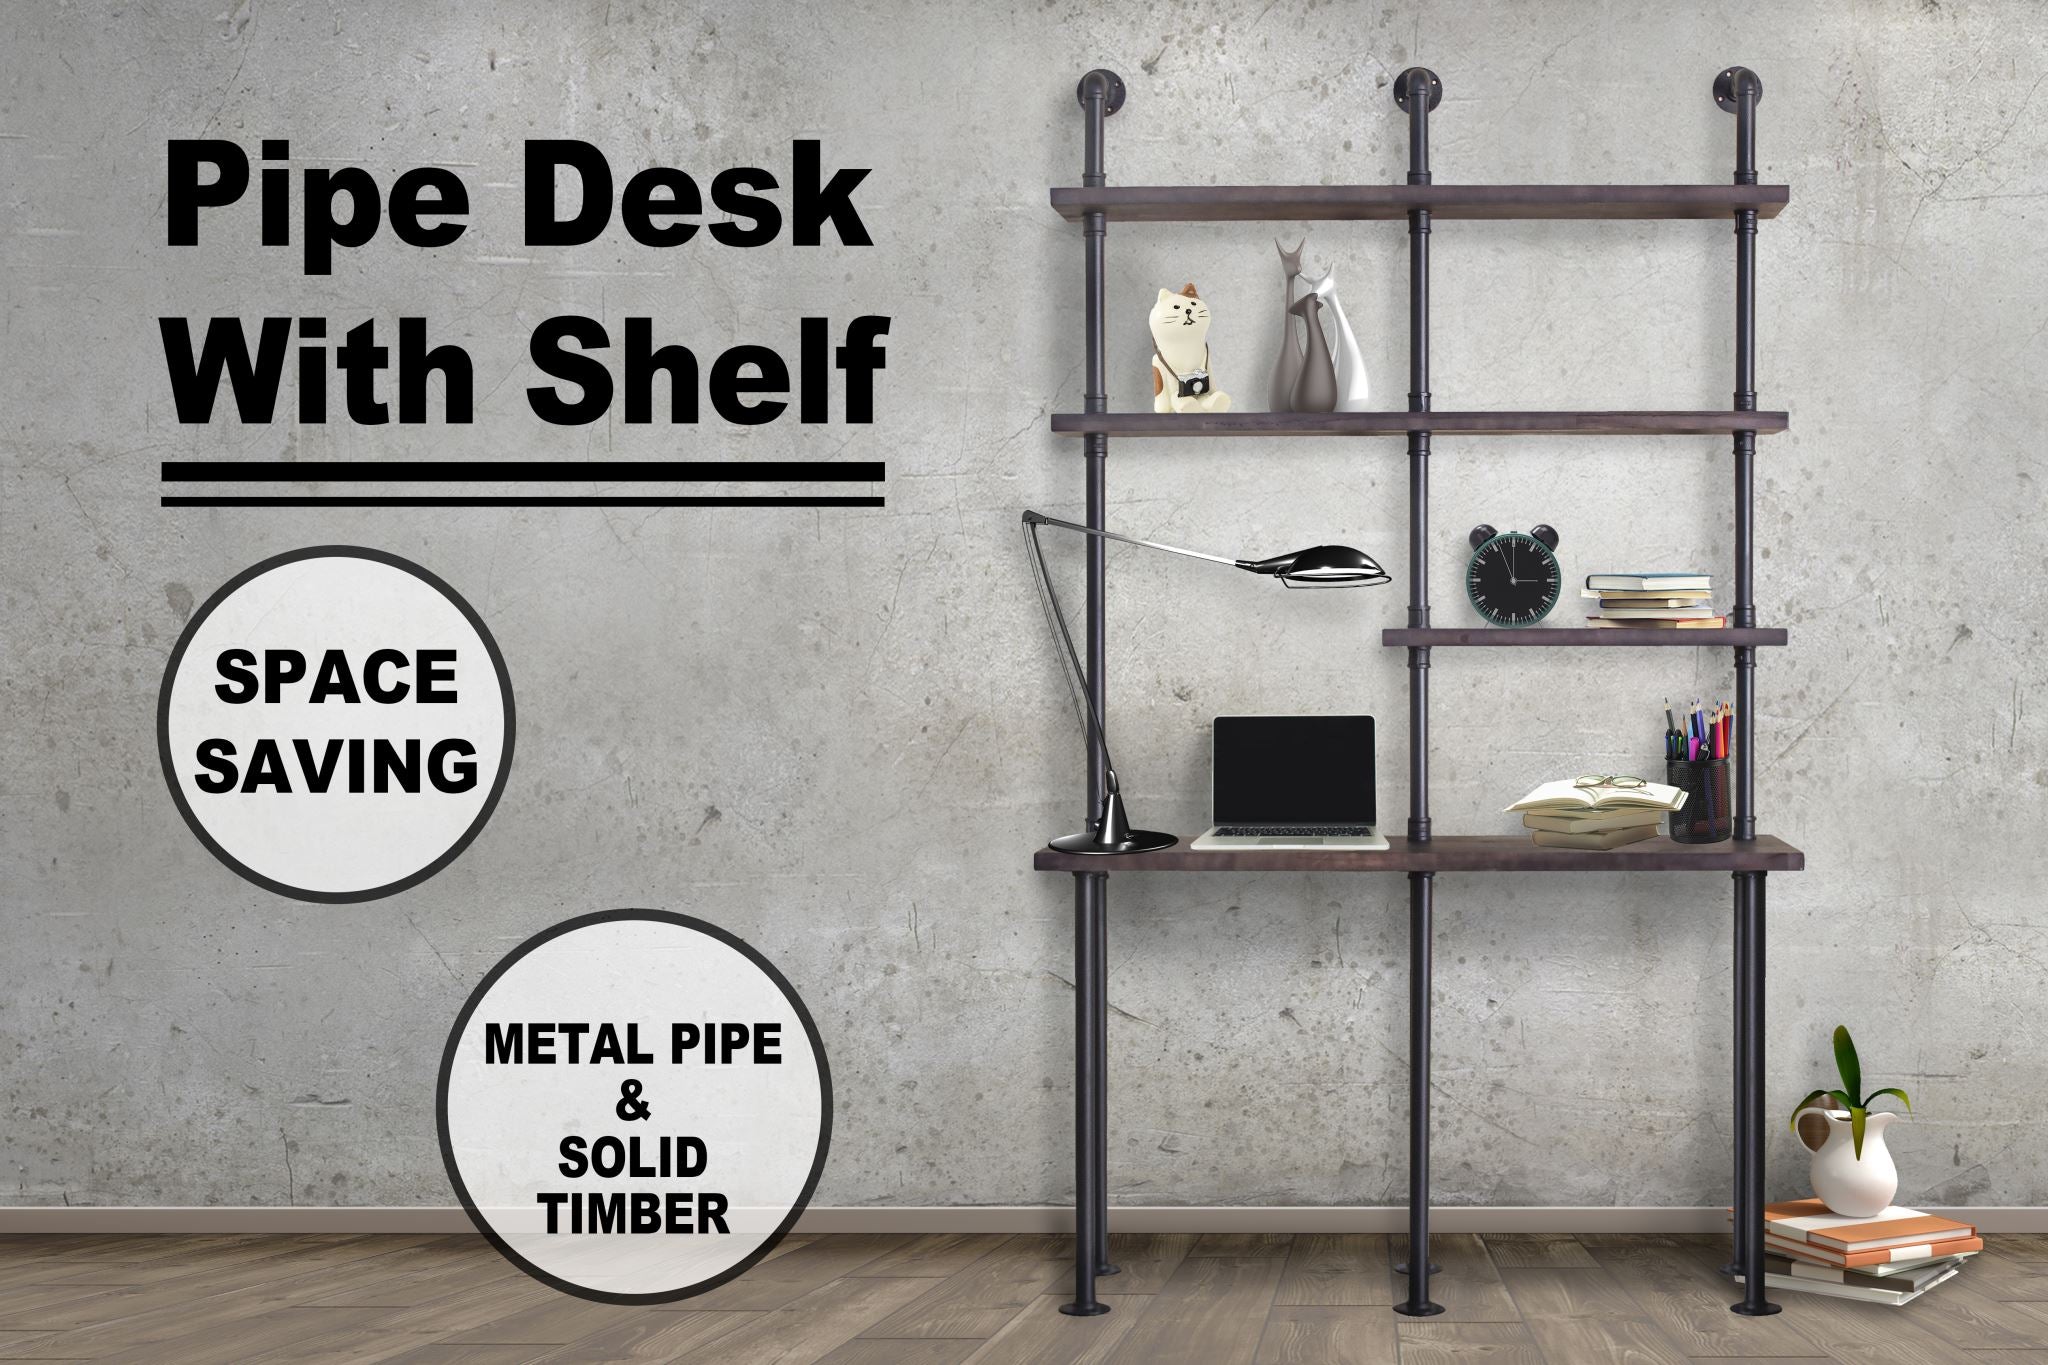 Pipe Desk With Shelf